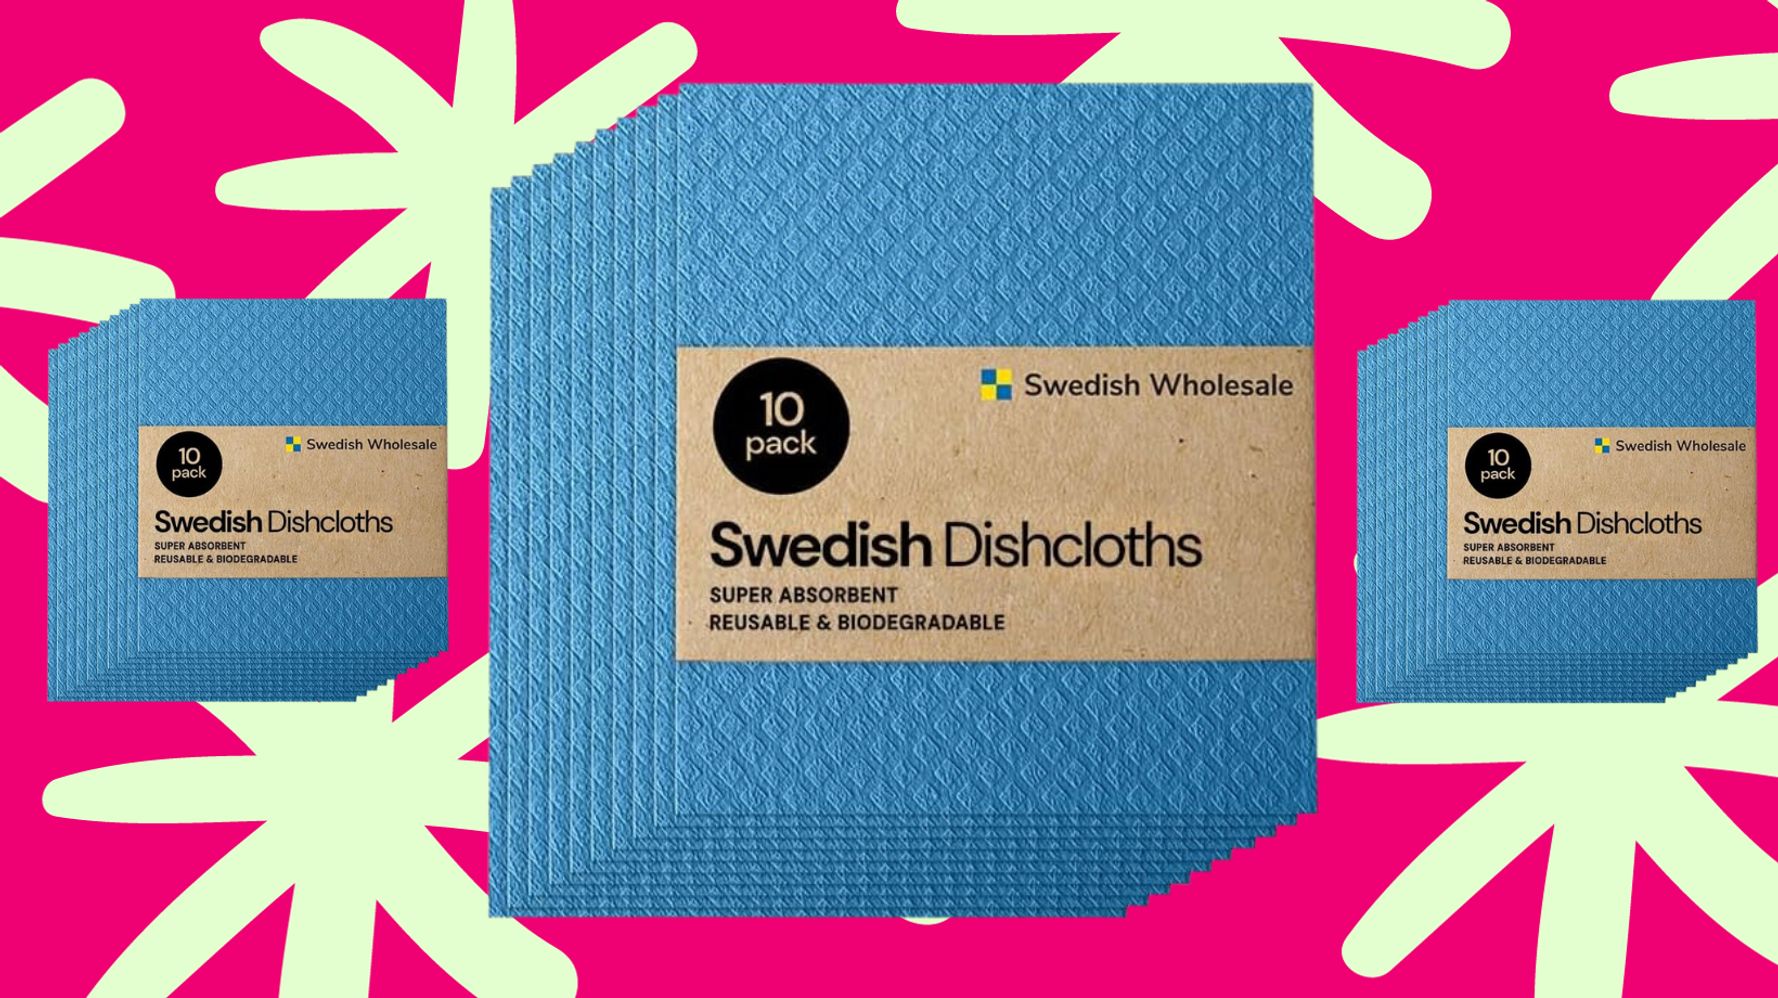  Swedish Dish Cloths - 10 Pack Absorbent, Reusable